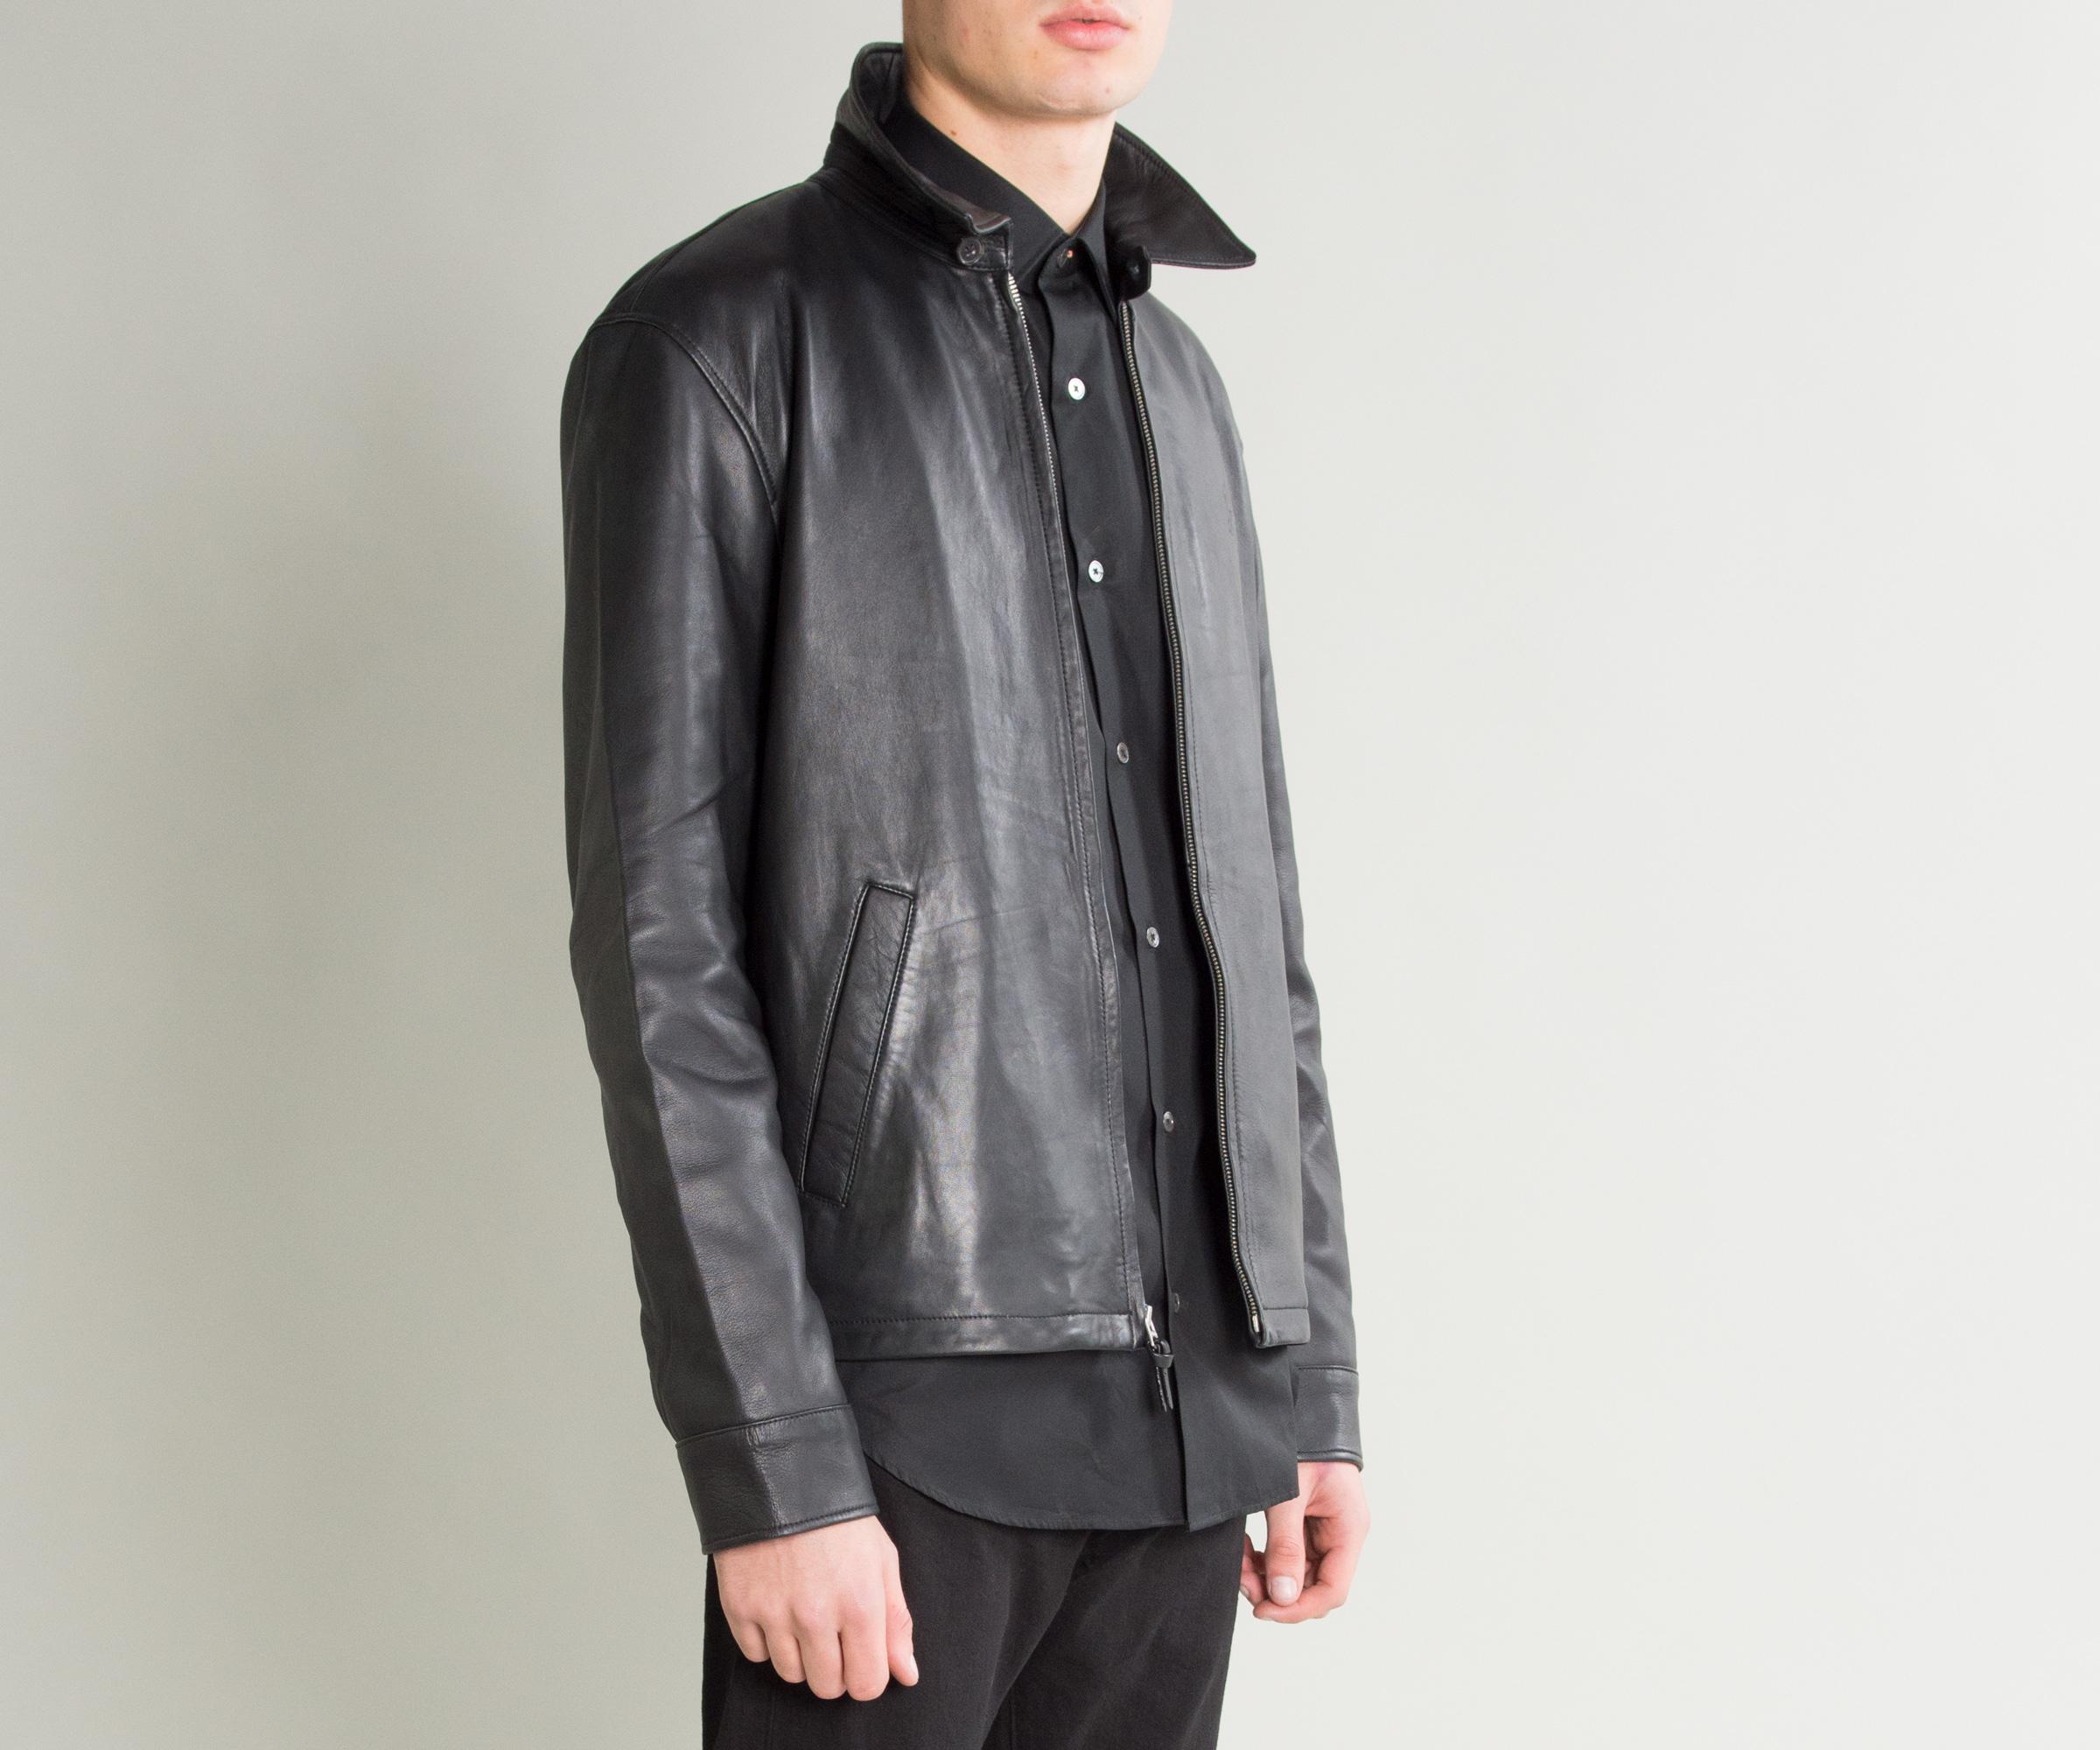 polo ralph lauren maxwell leather jacket